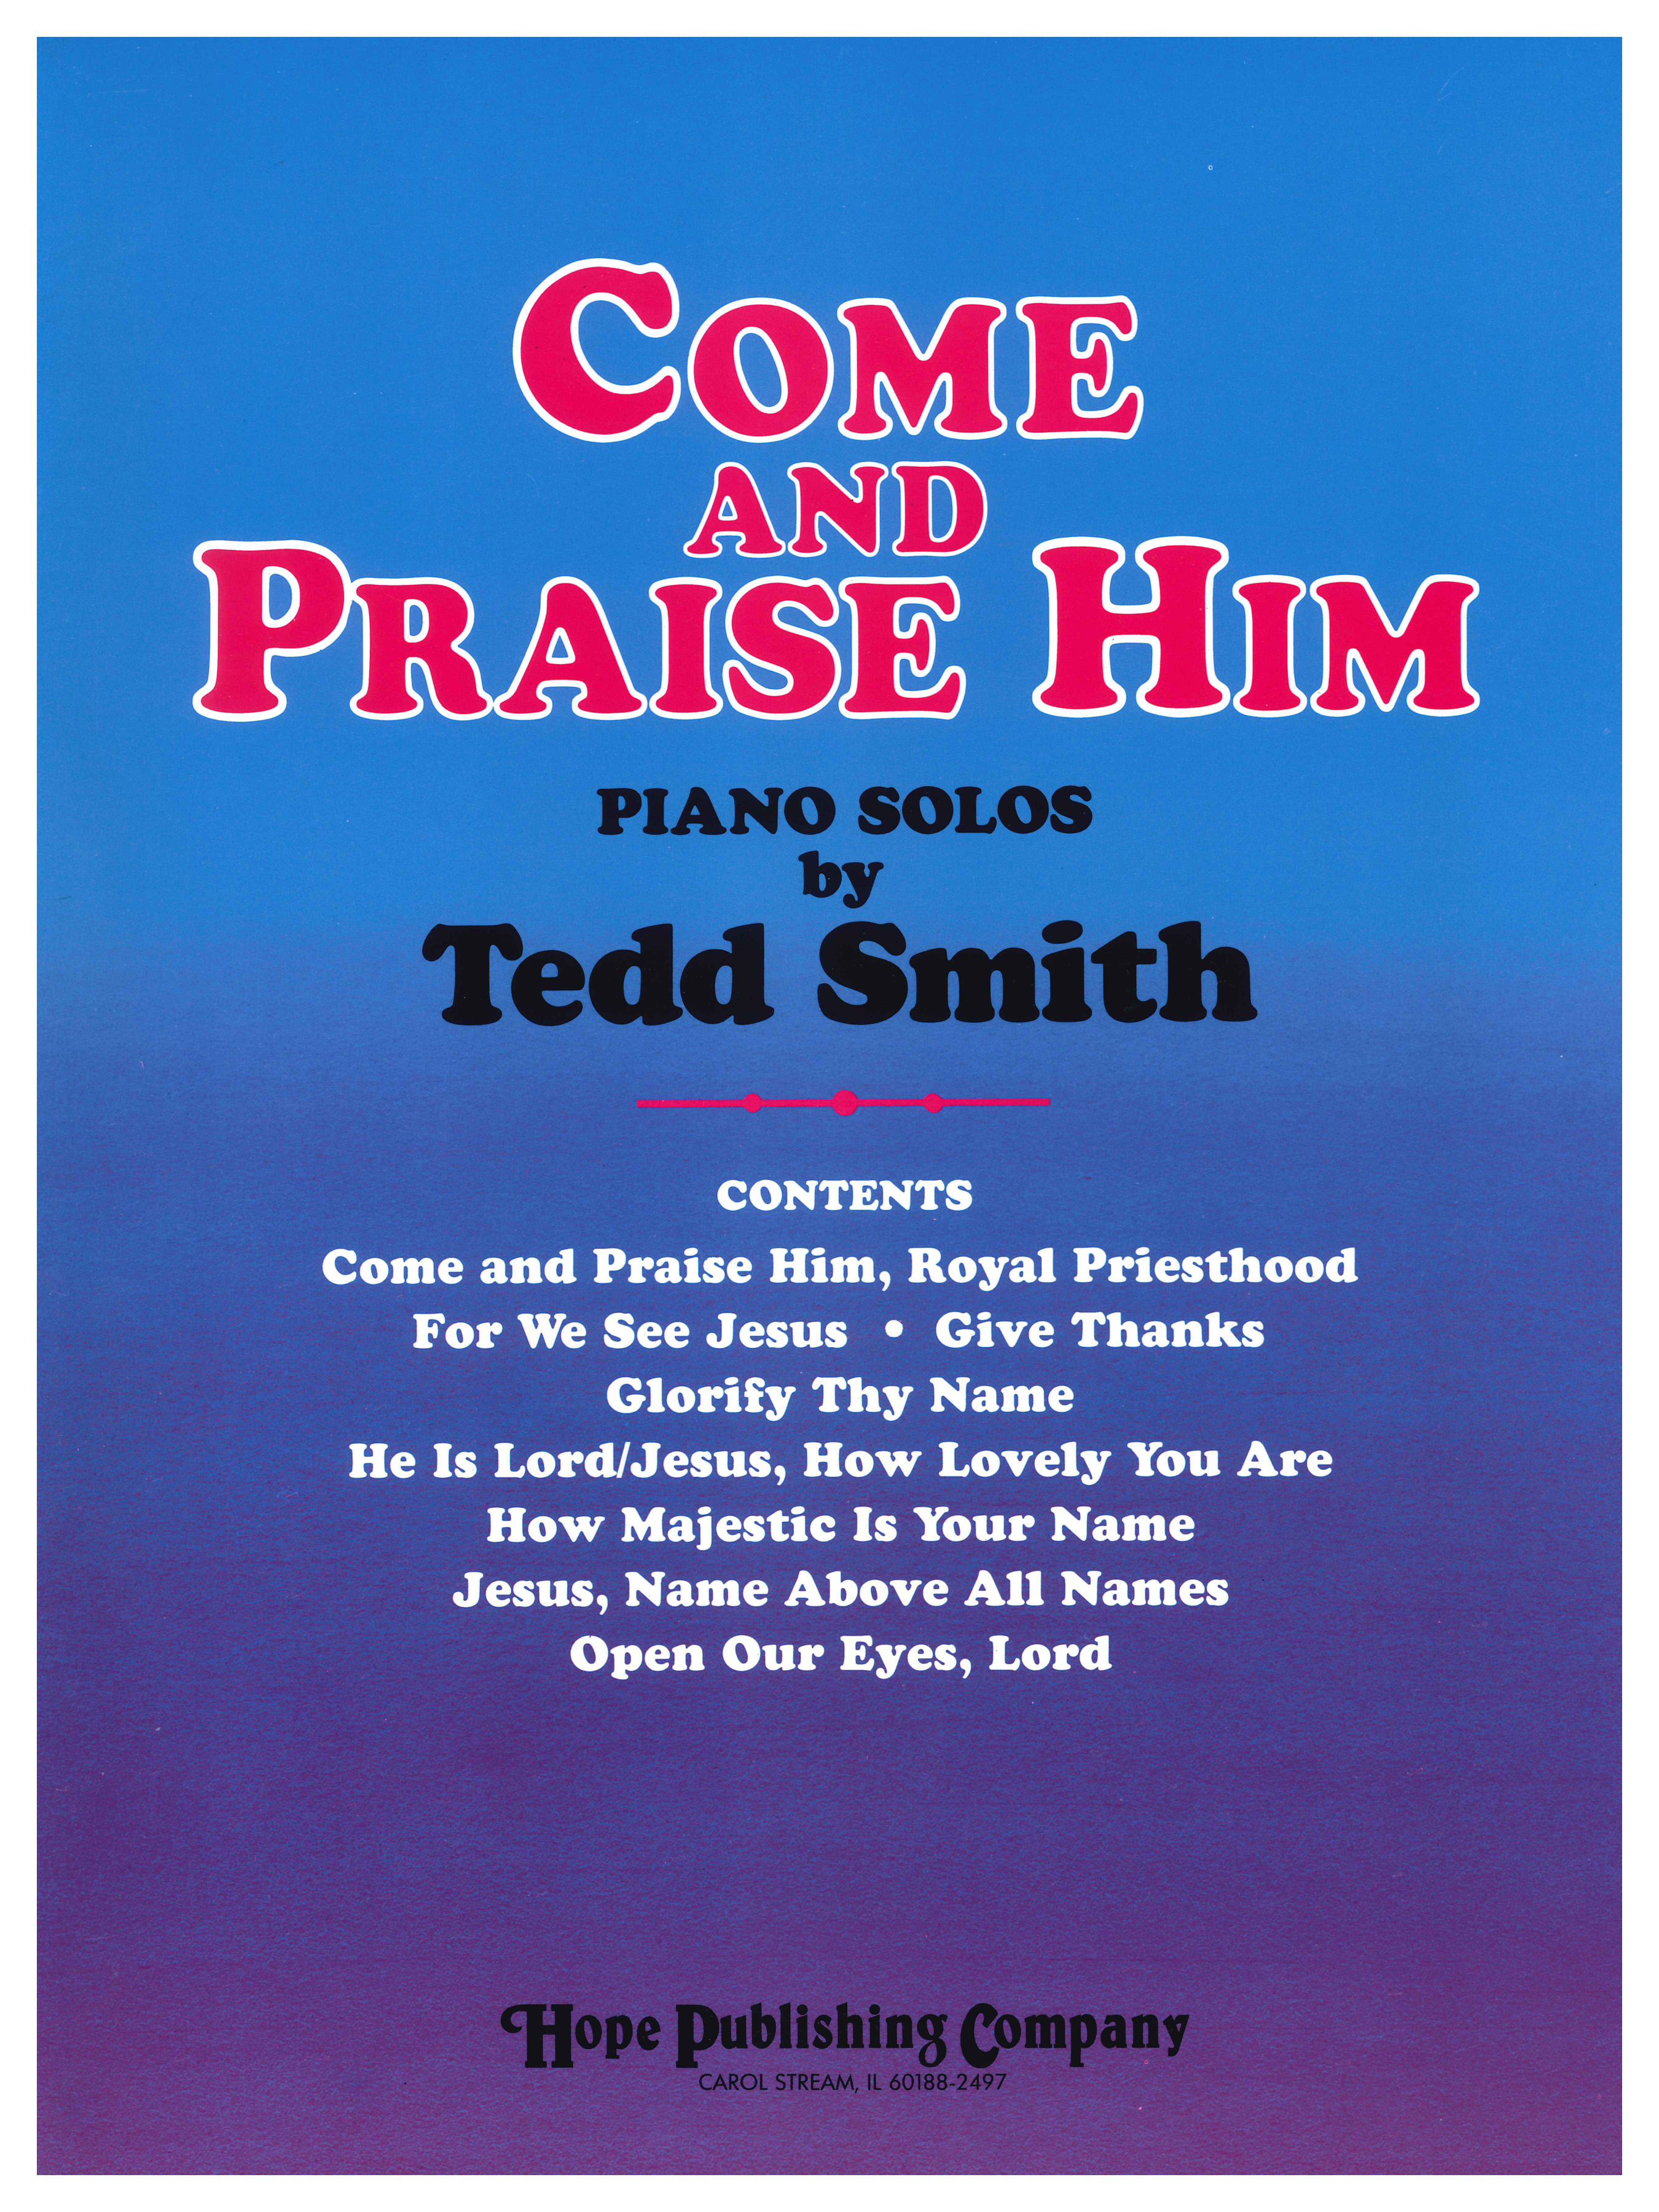 Come and Praise Him - Piano Solo Cover Image